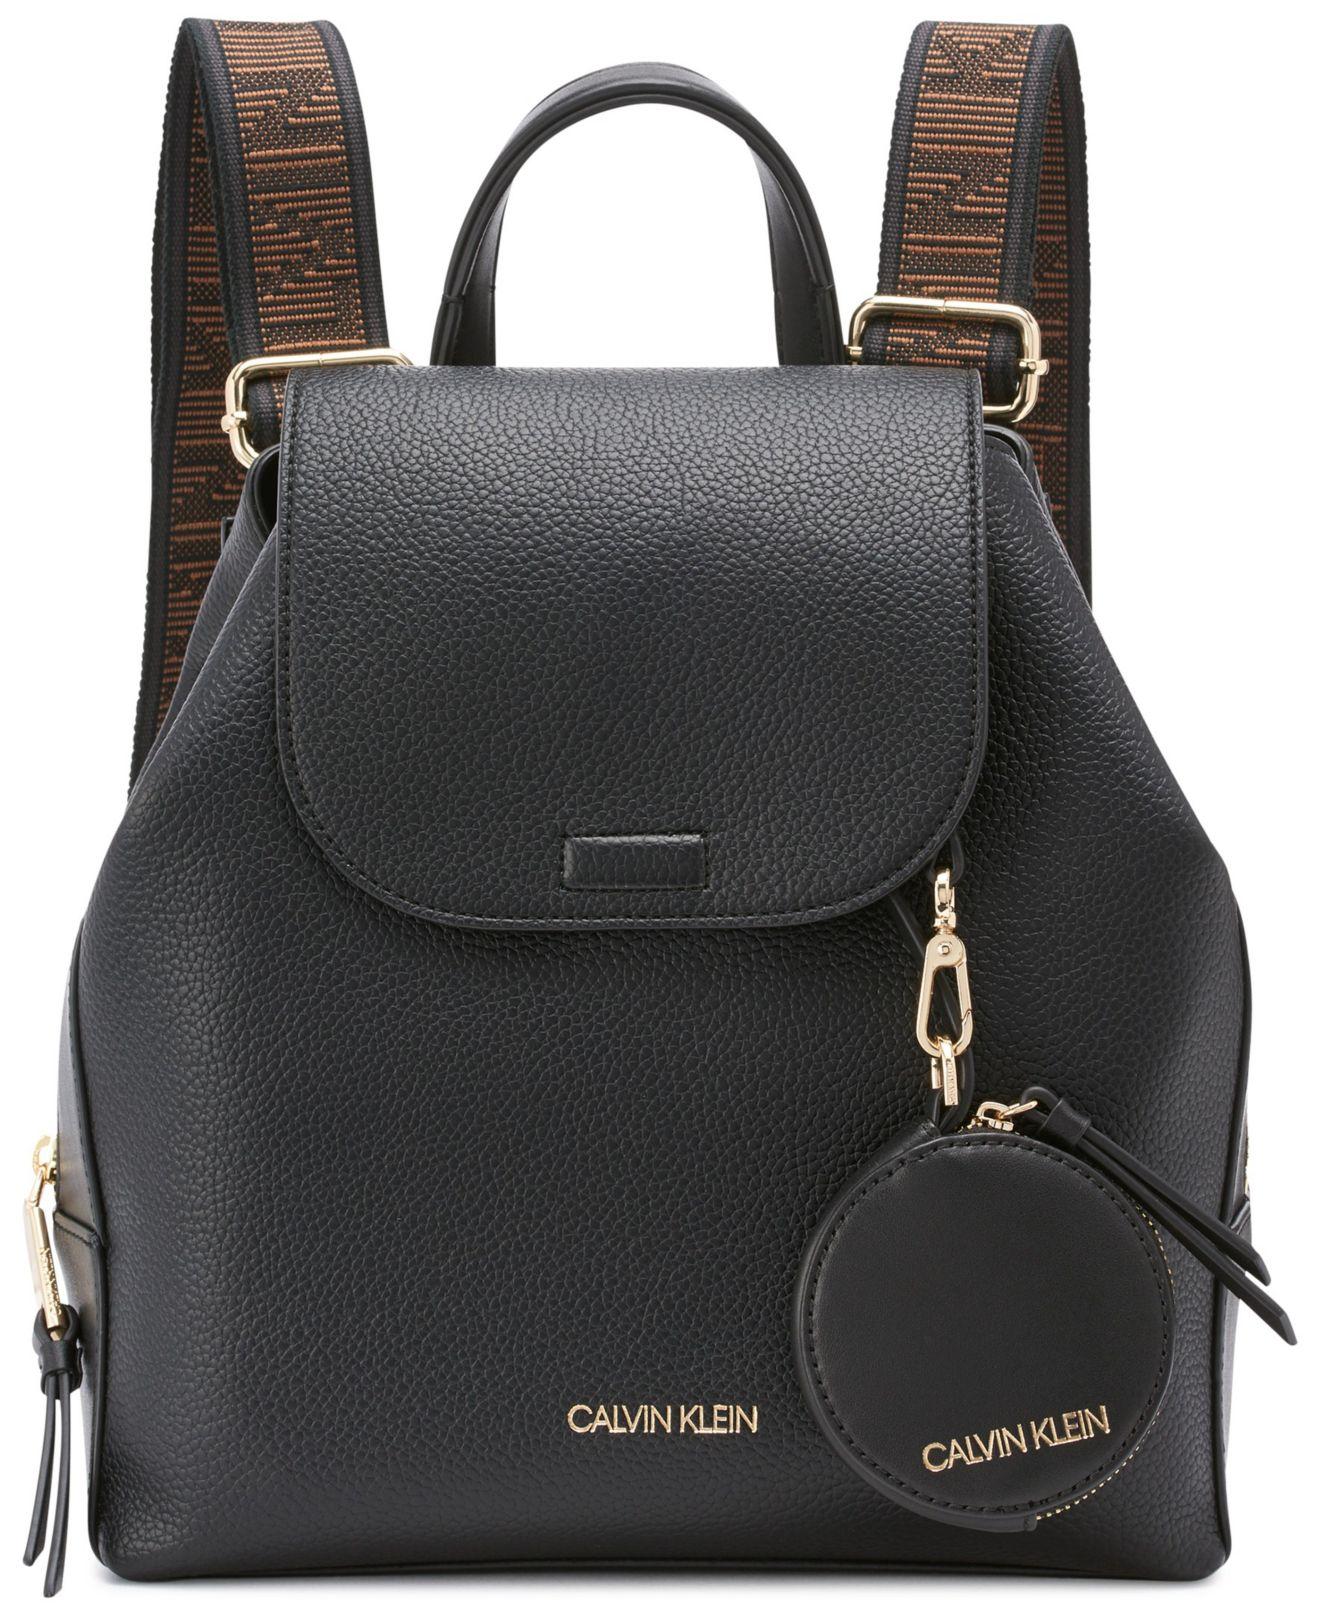 Calvin Klein Millie Backpack in Black/Black (Black) - Save 49% | Lyst